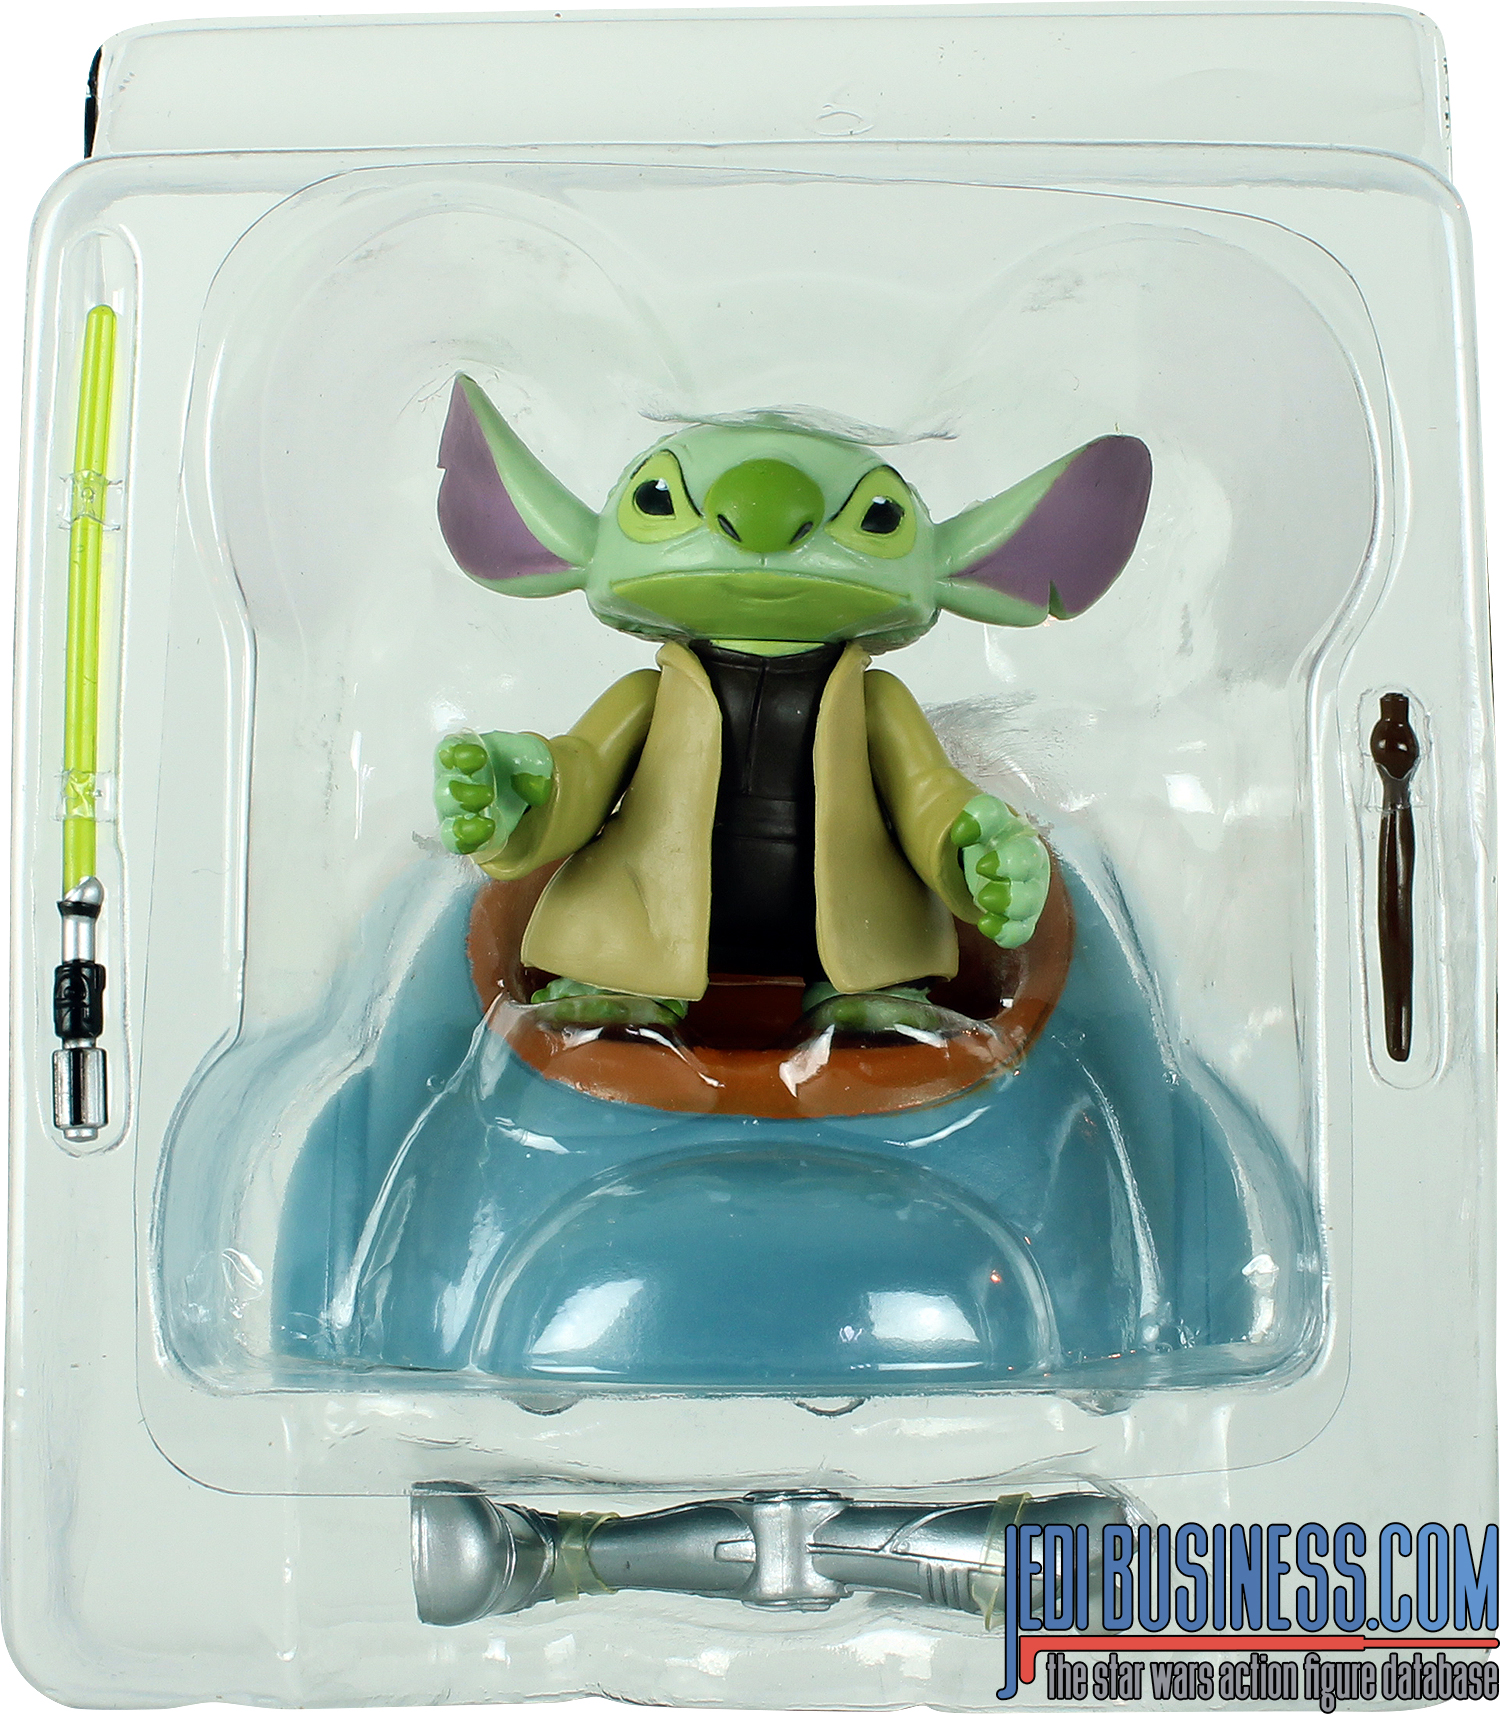 Stitch Series 6 - Stitch As Yoda With Chair